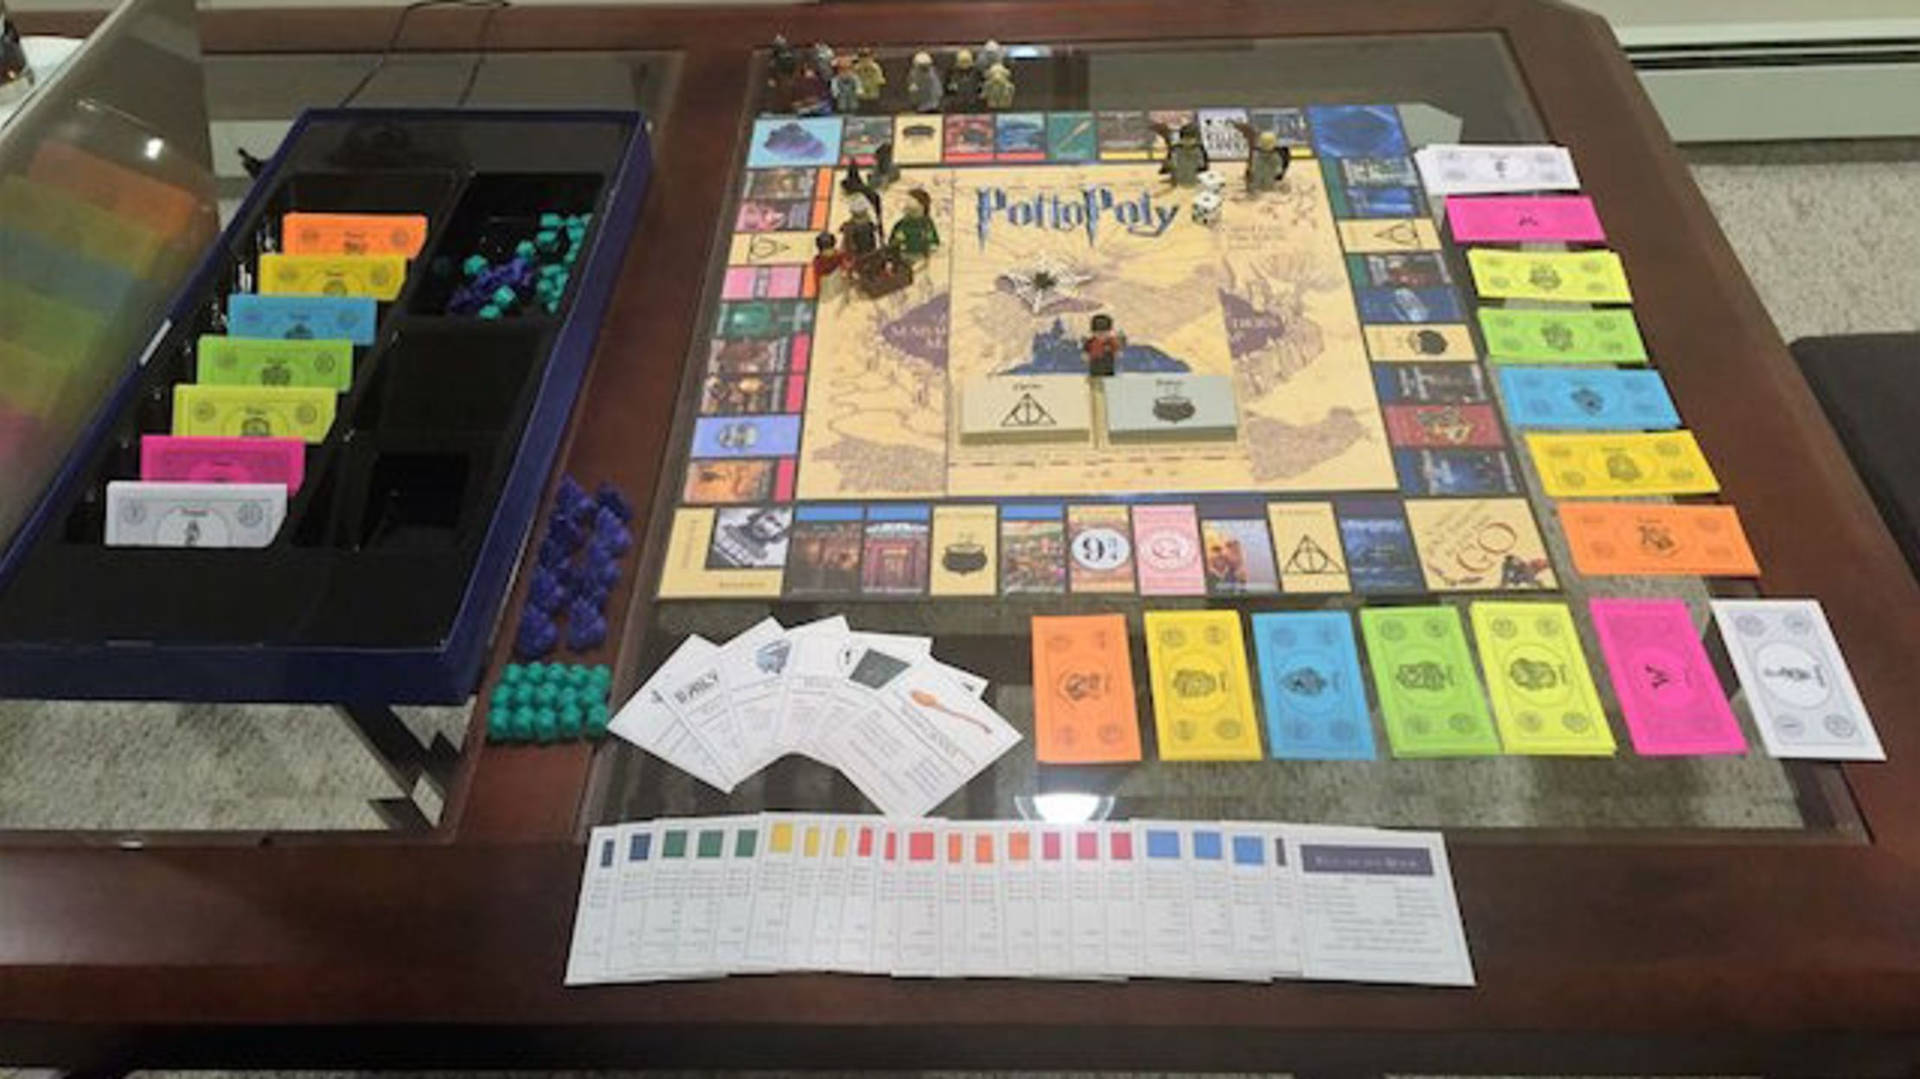 Monopoly Harry Potter